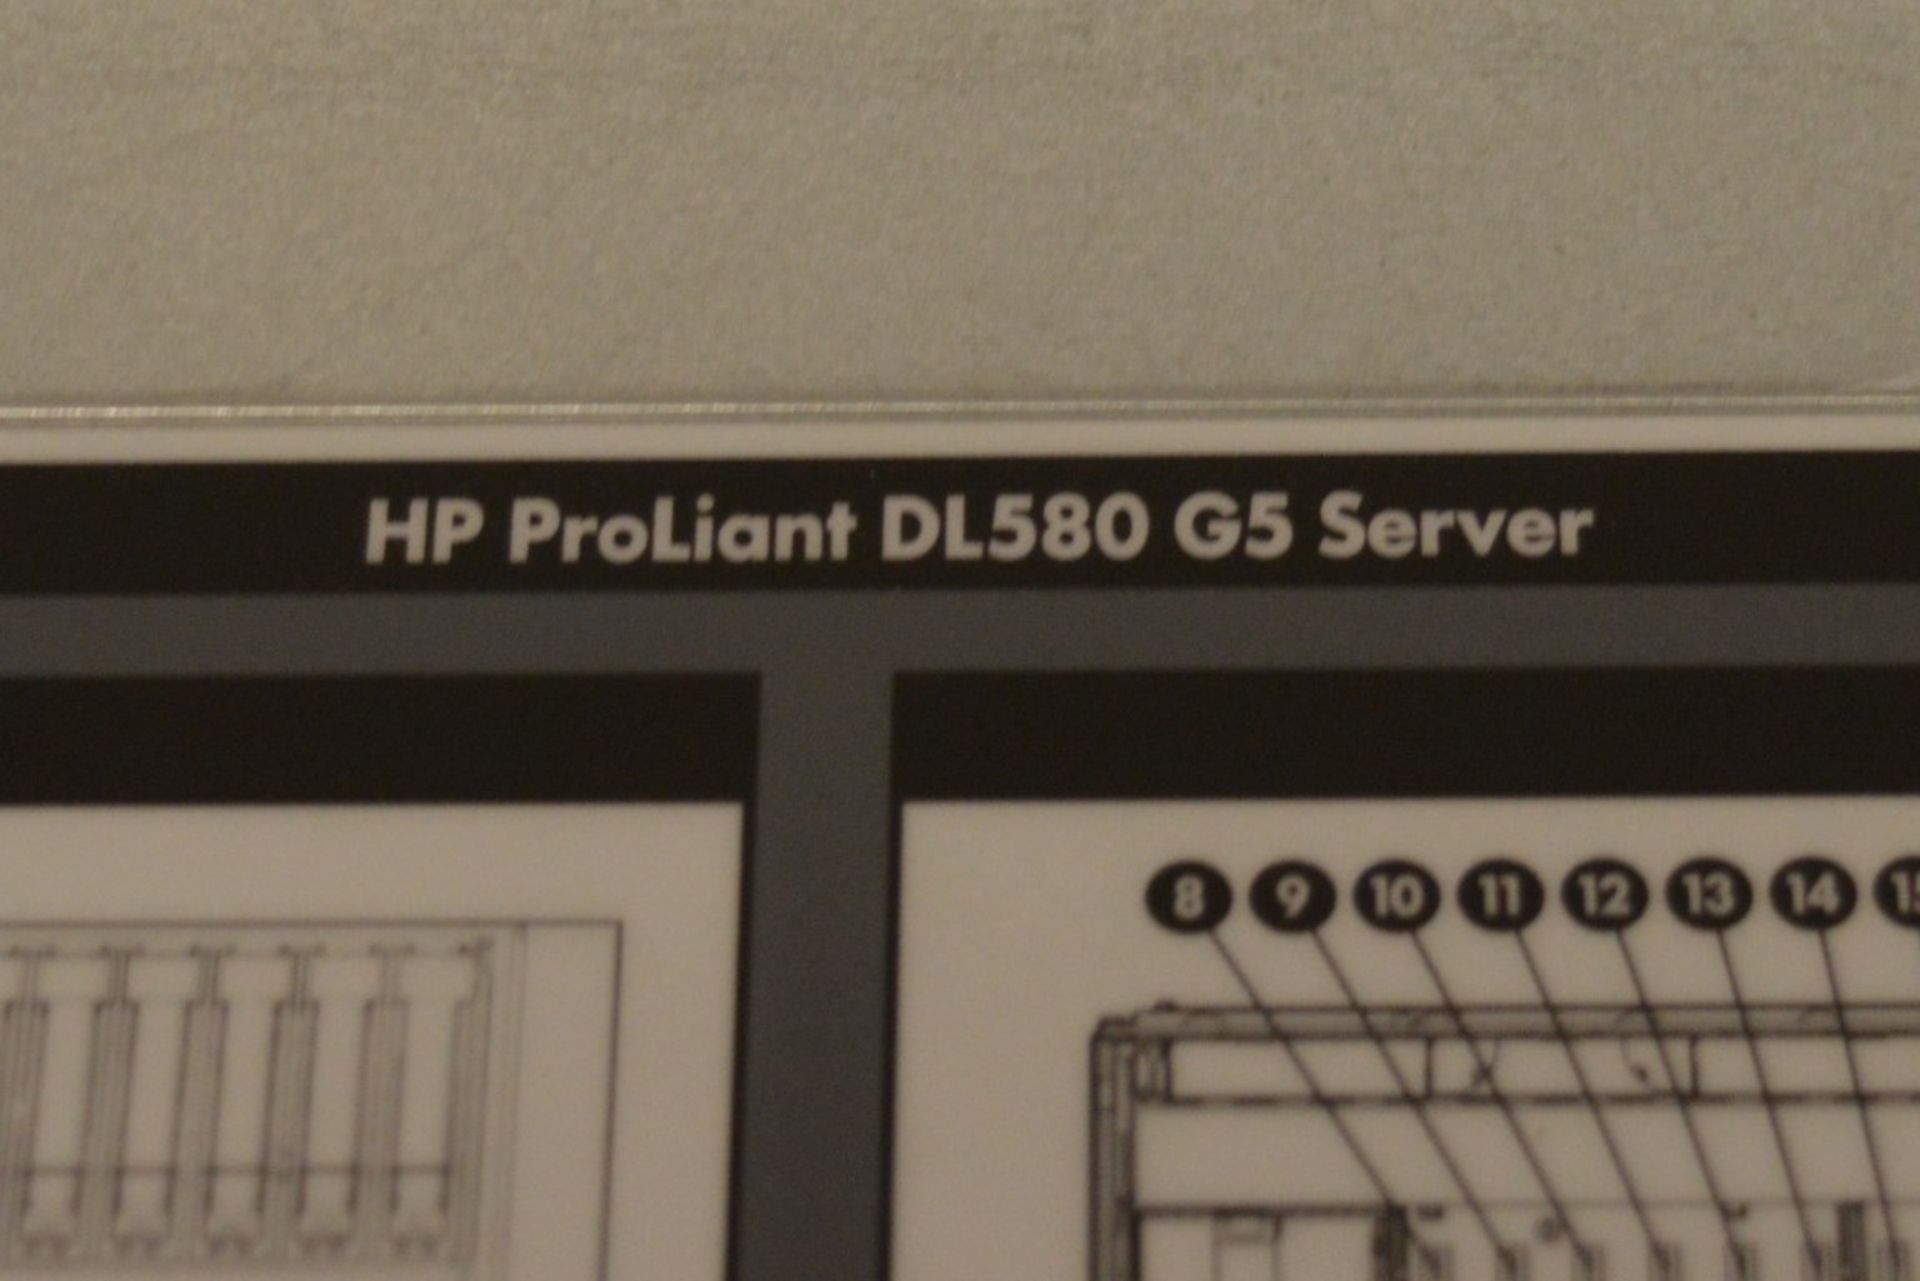 1 x HP Proliant DL580 G5 4U Rackmount File Server - Features 4 x 2.4ghz Intel Quad Core - Image 3 of 4